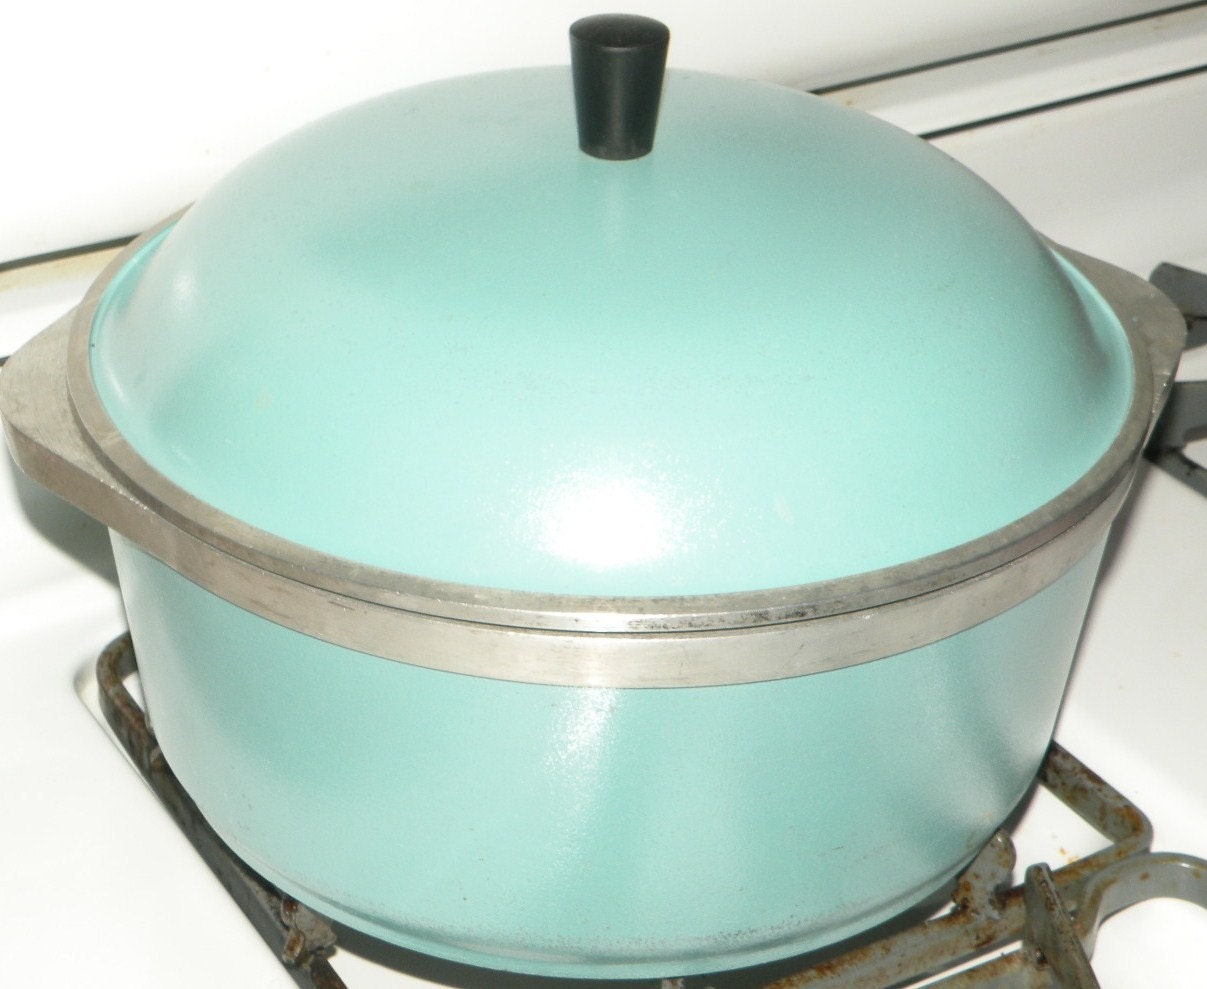 club colorcast cookware